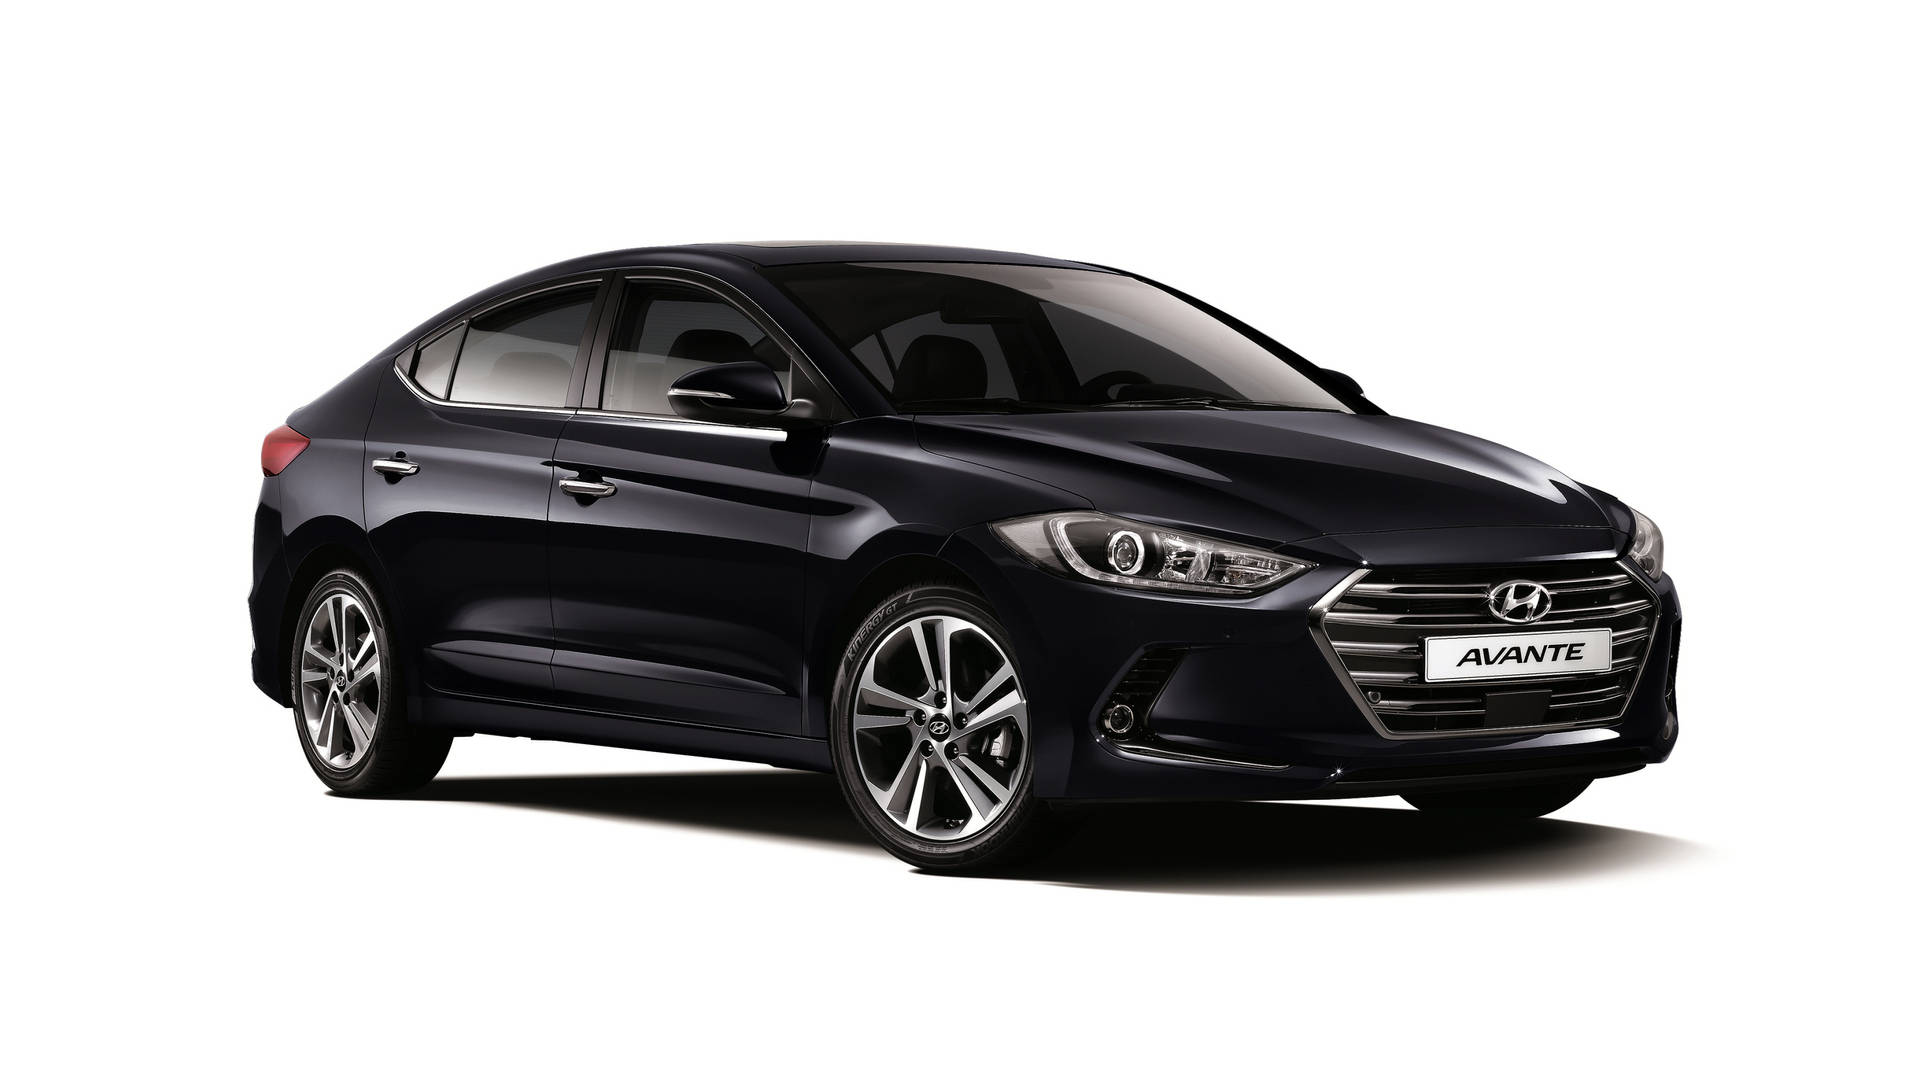 Shiny Black Hyundai Avante